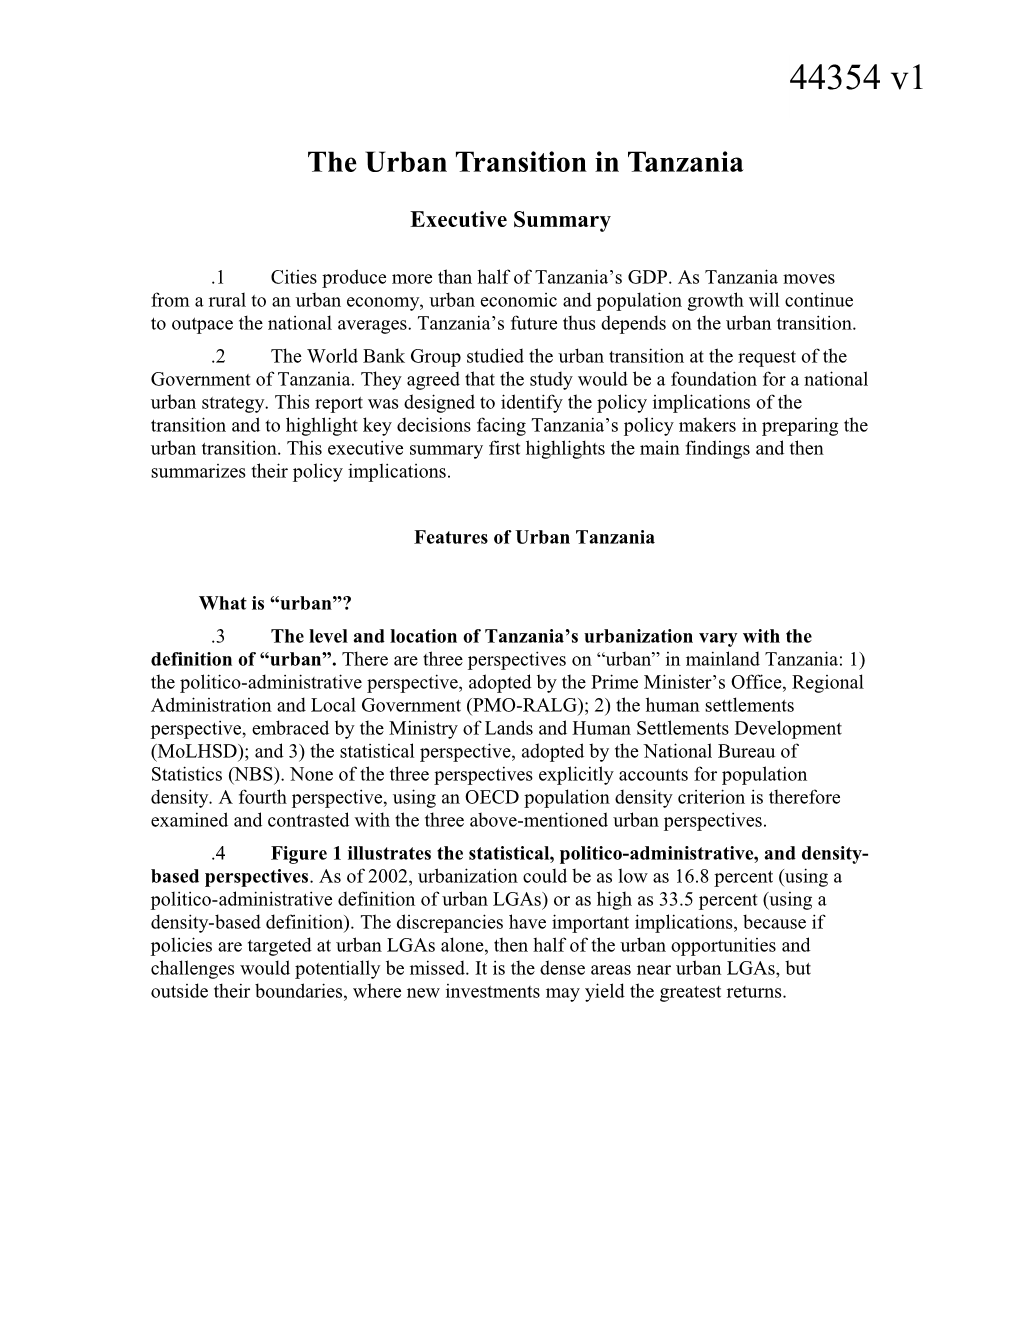 The Urban Transition in Tanzania